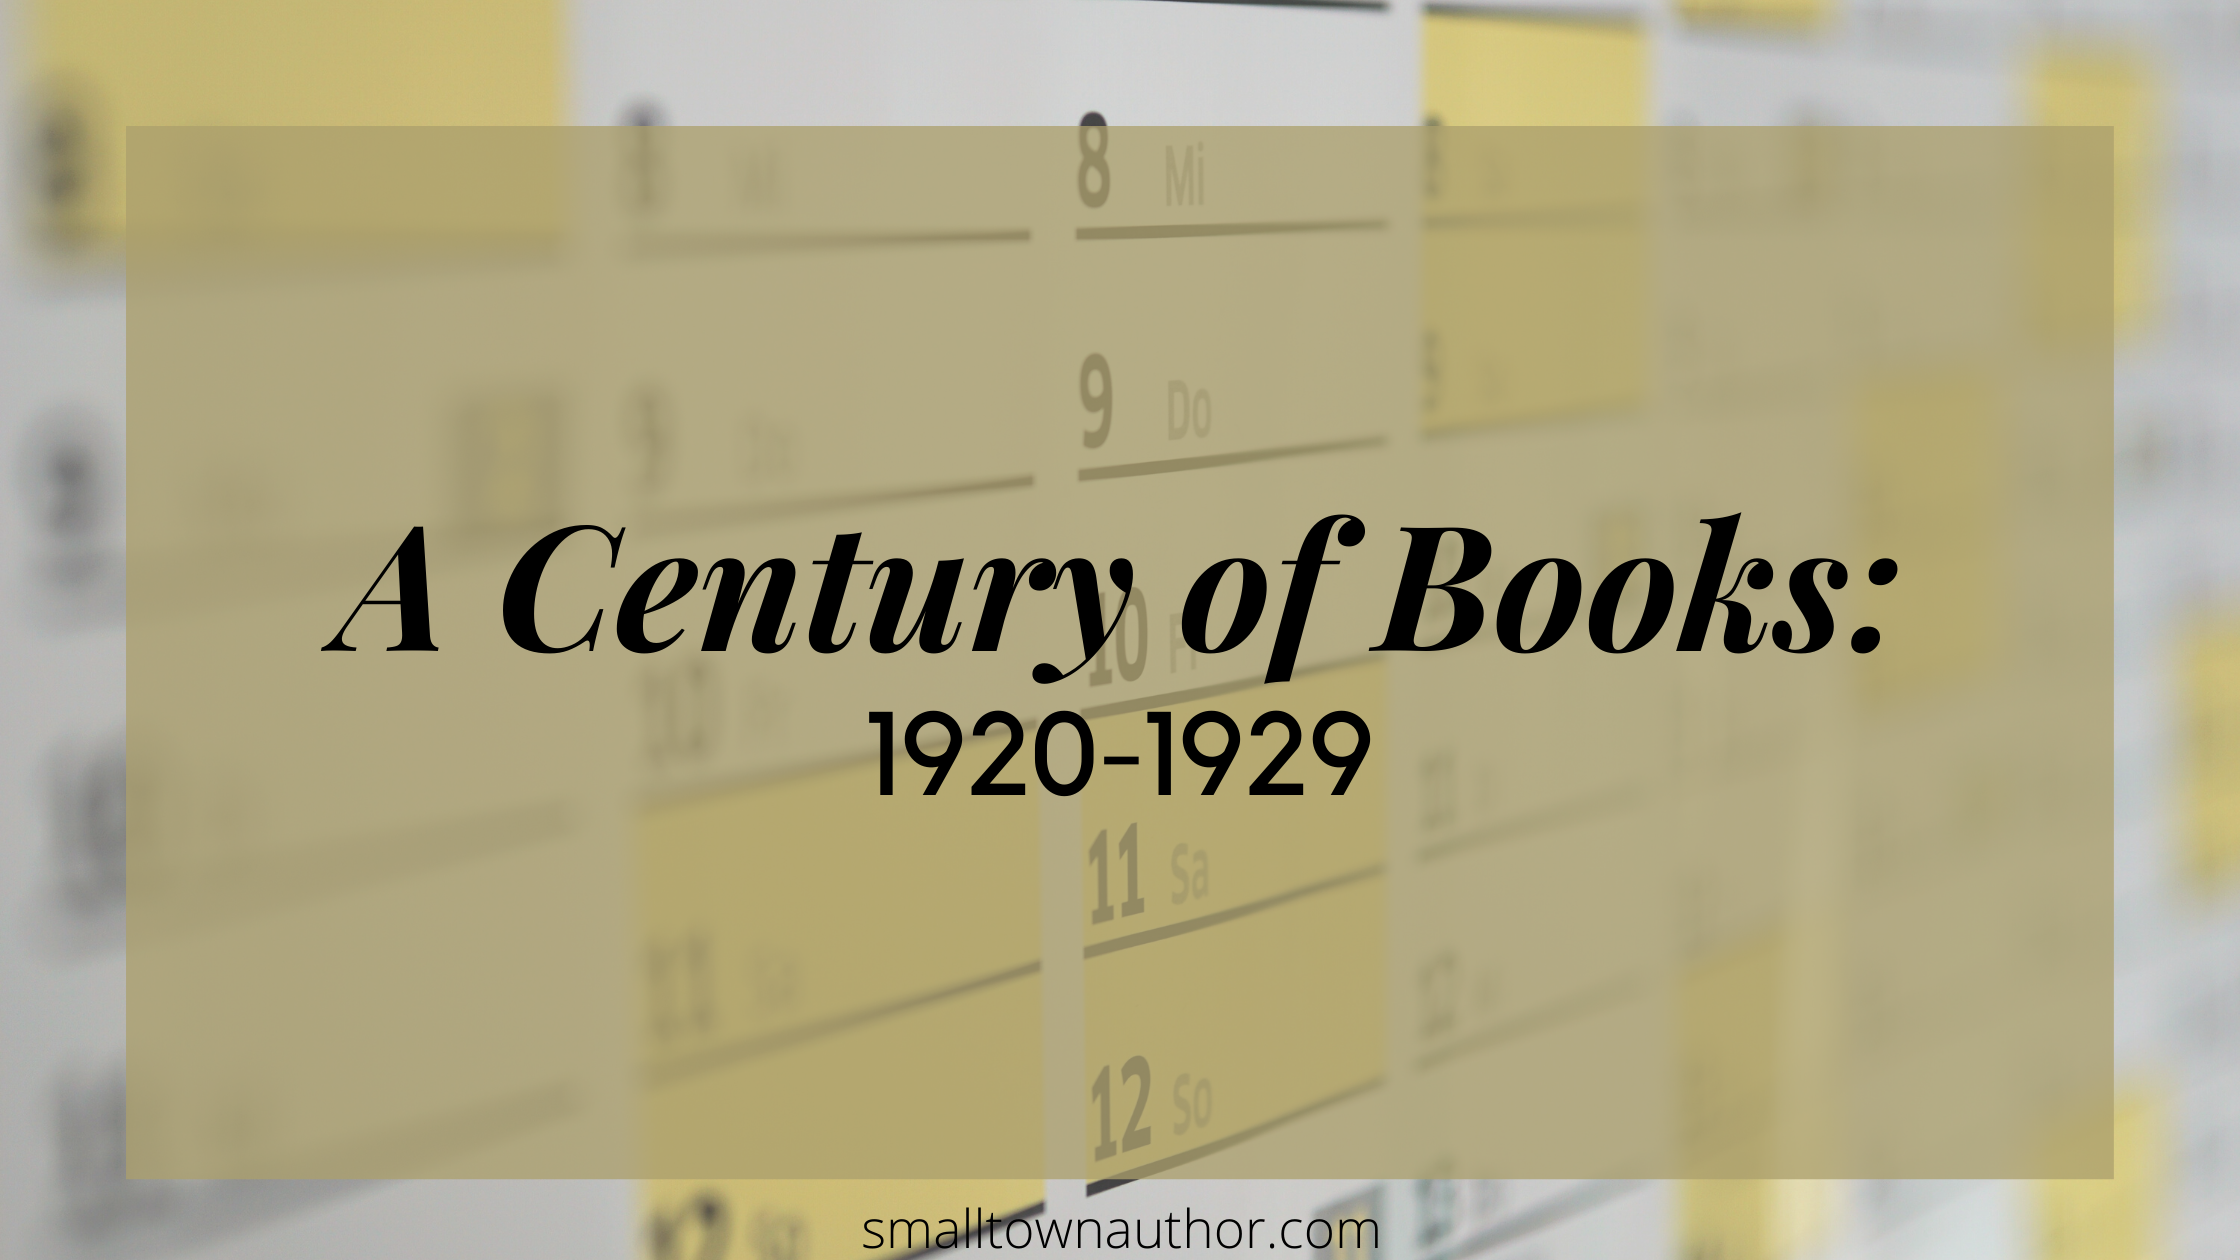 A Century of Books: 1920-1929